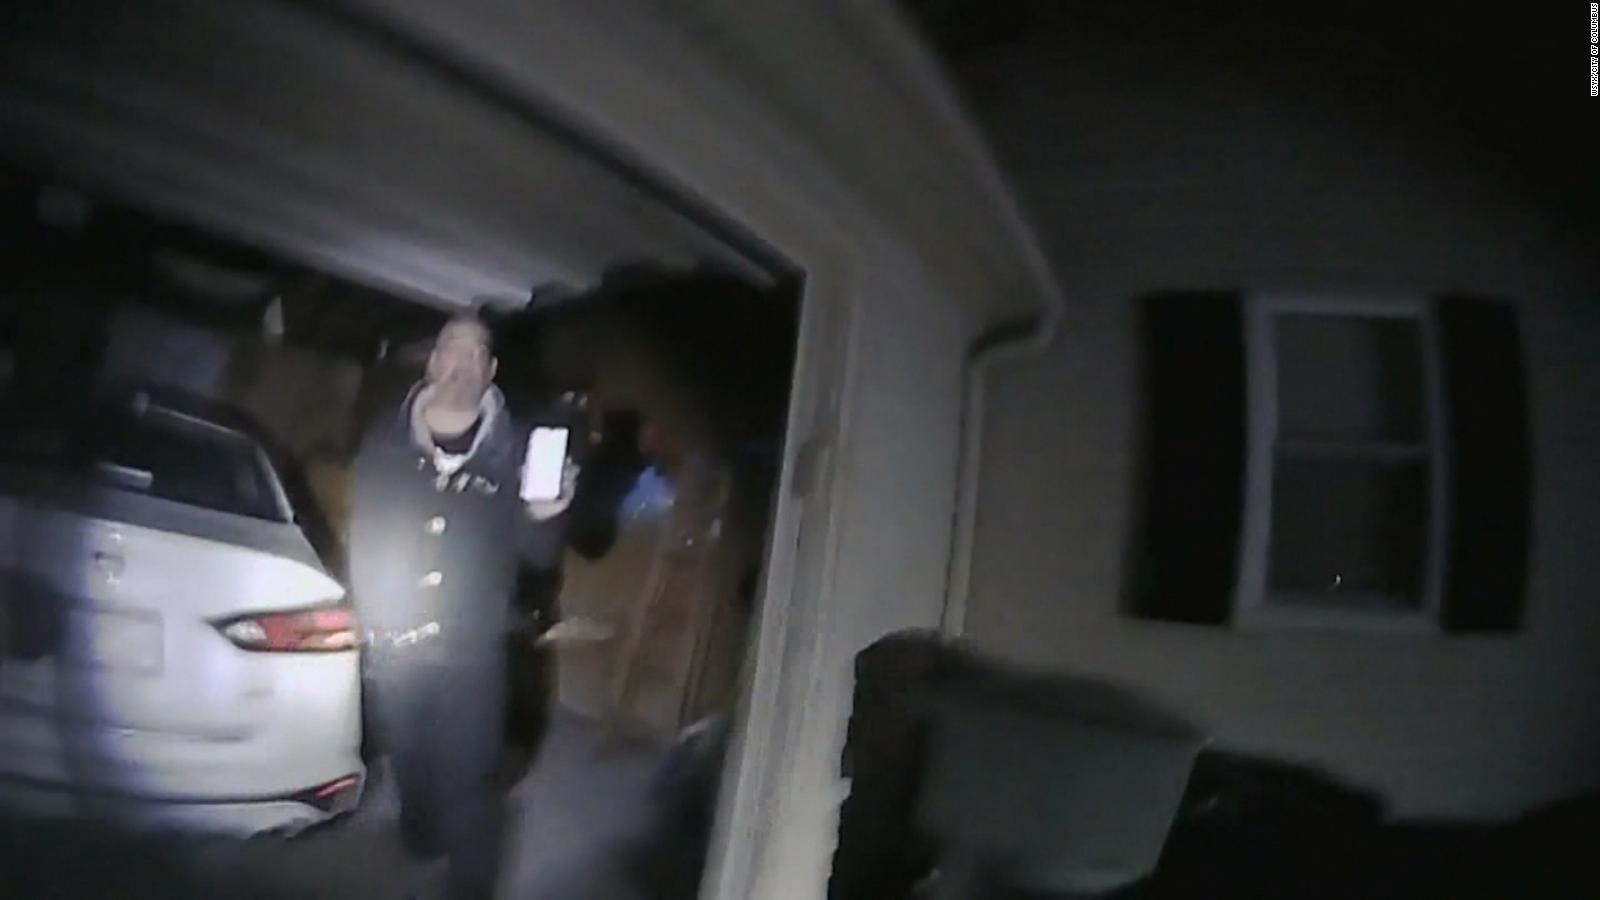 columbus police shooting body cam video reddit